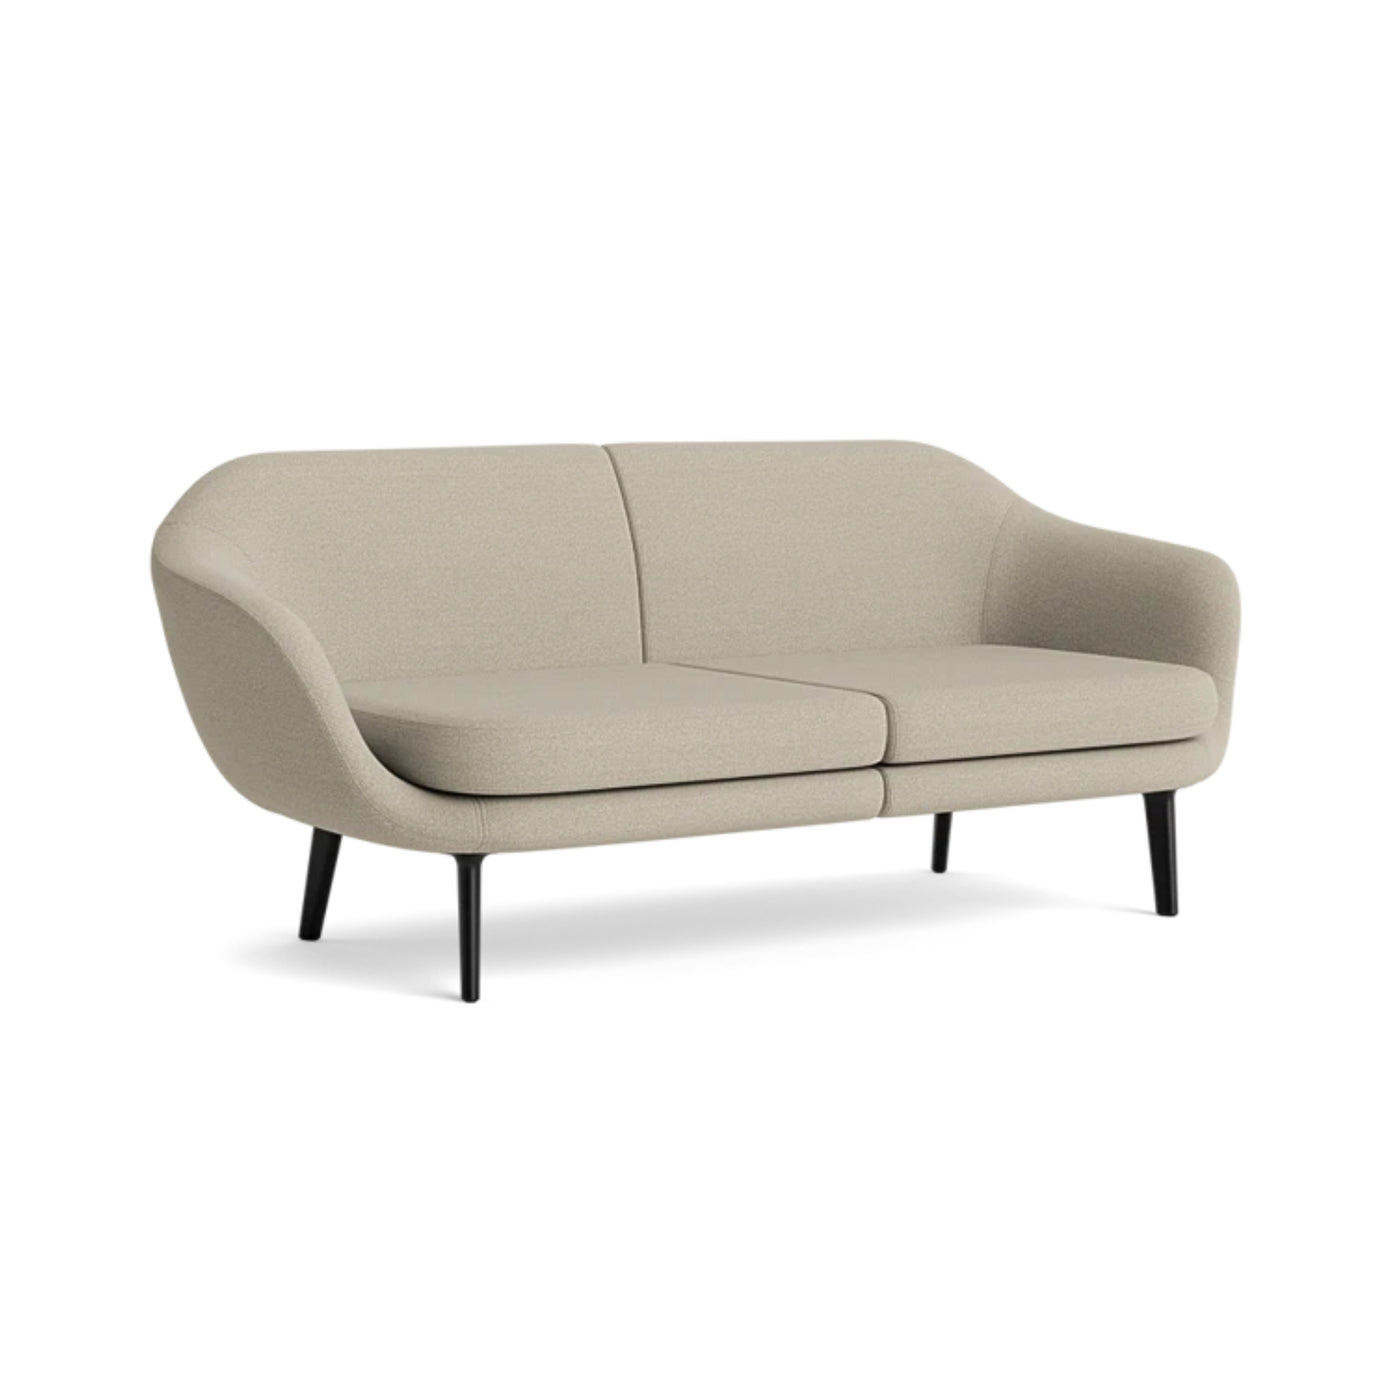 Normann Copenhagen Sum Modular 2 Seater Sofa. Made to order from someday designs. #colour_hallingdal-220